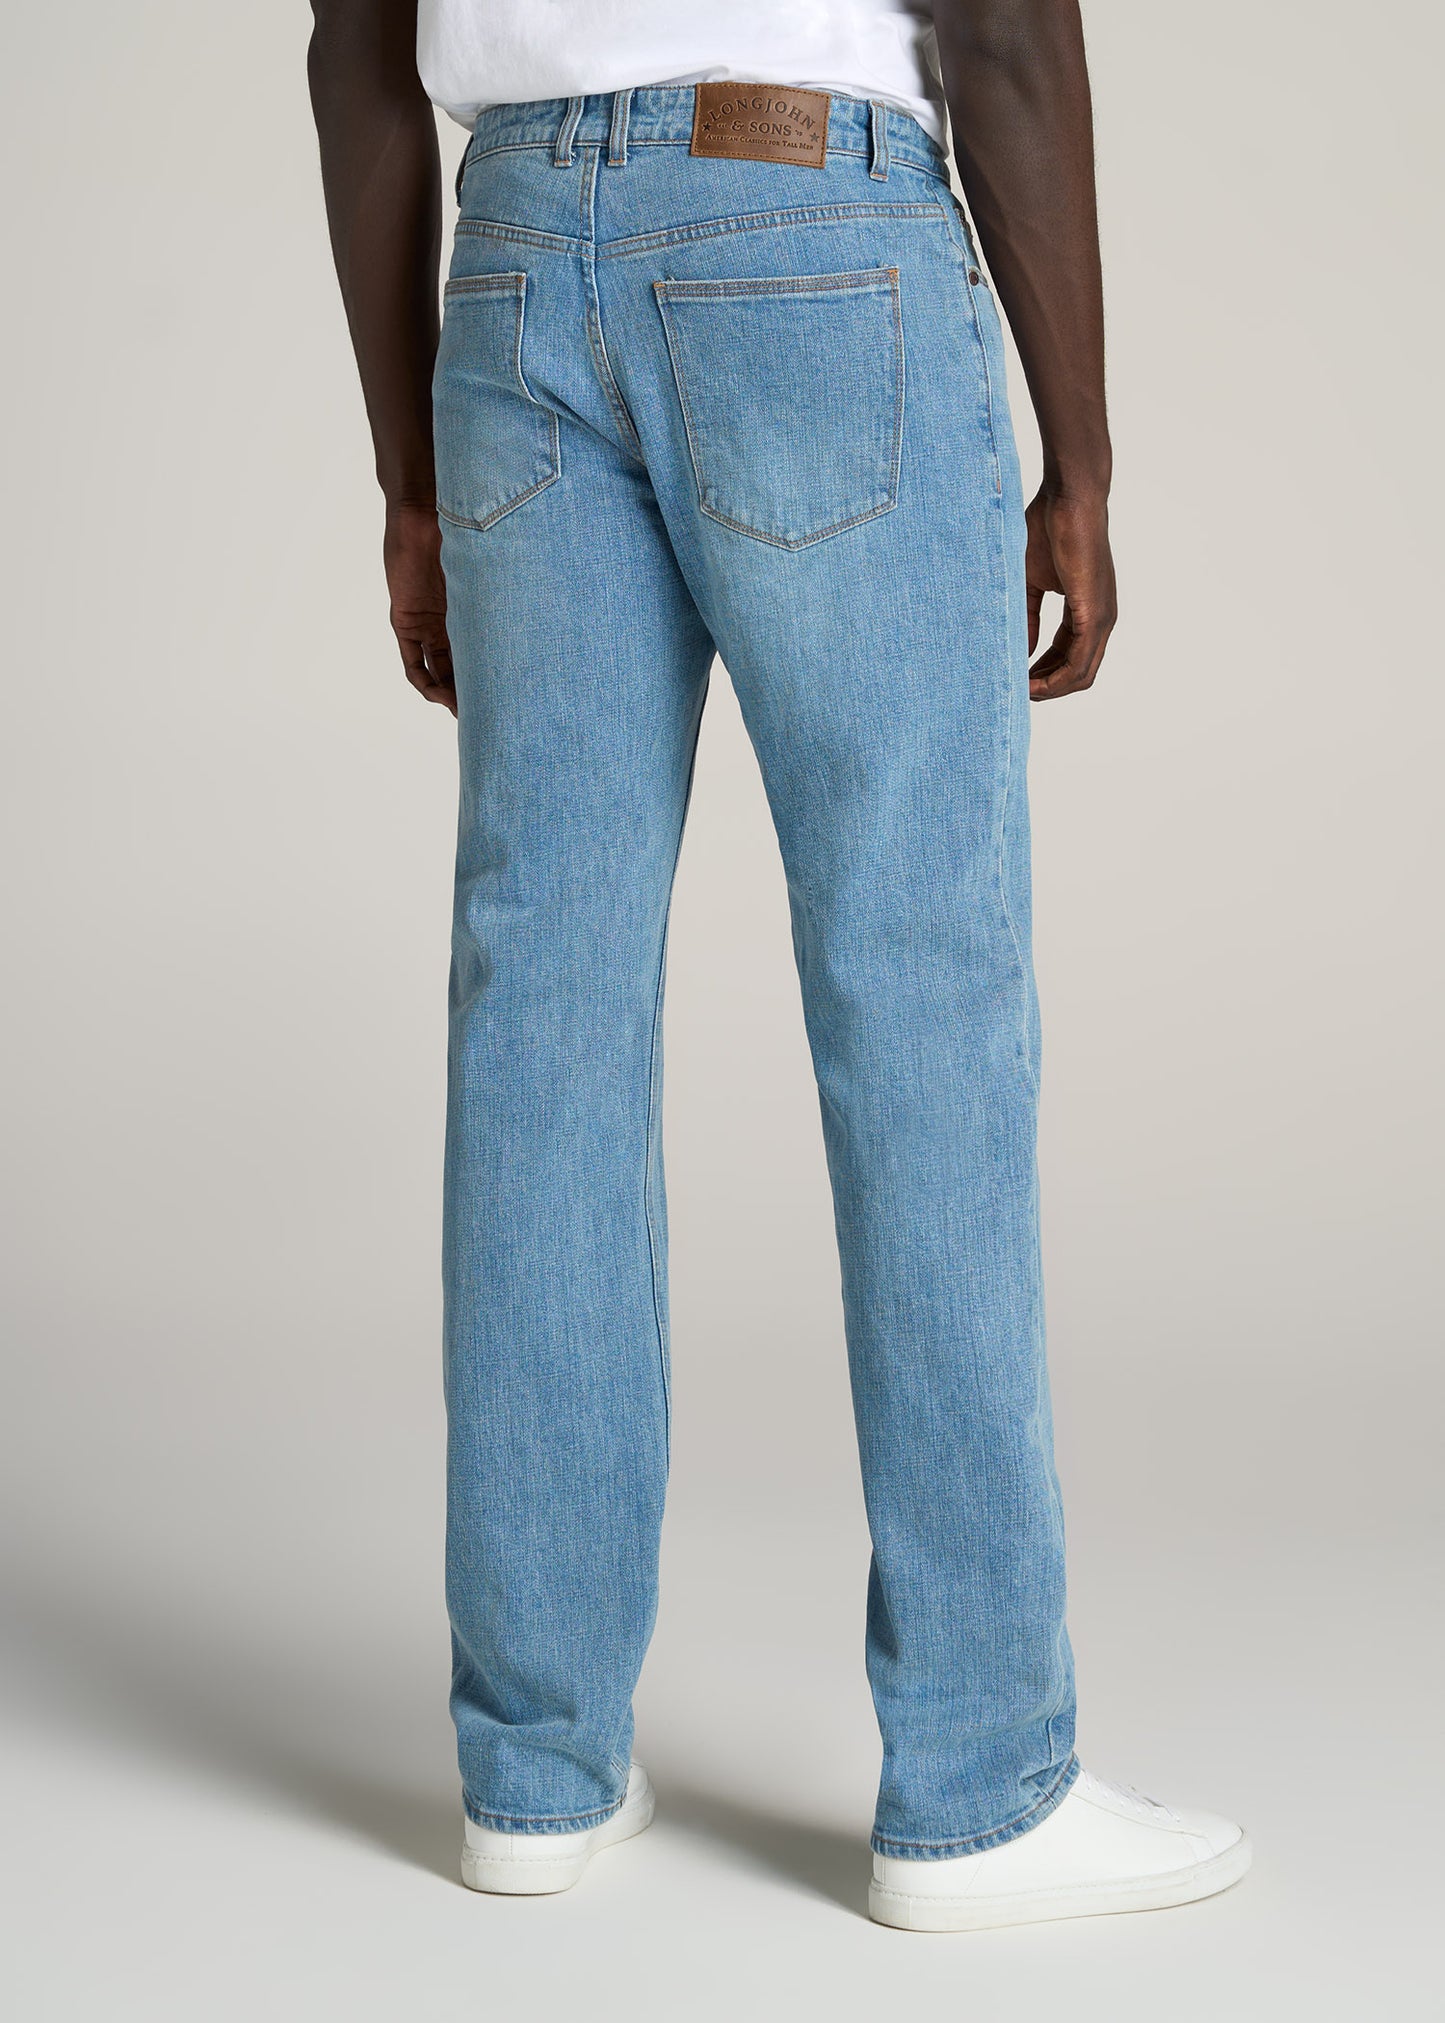       American-Tall-Men-LJS-Rugged-J1-STRAIGHT-LEG-Jeans-Heritage-Faded-back